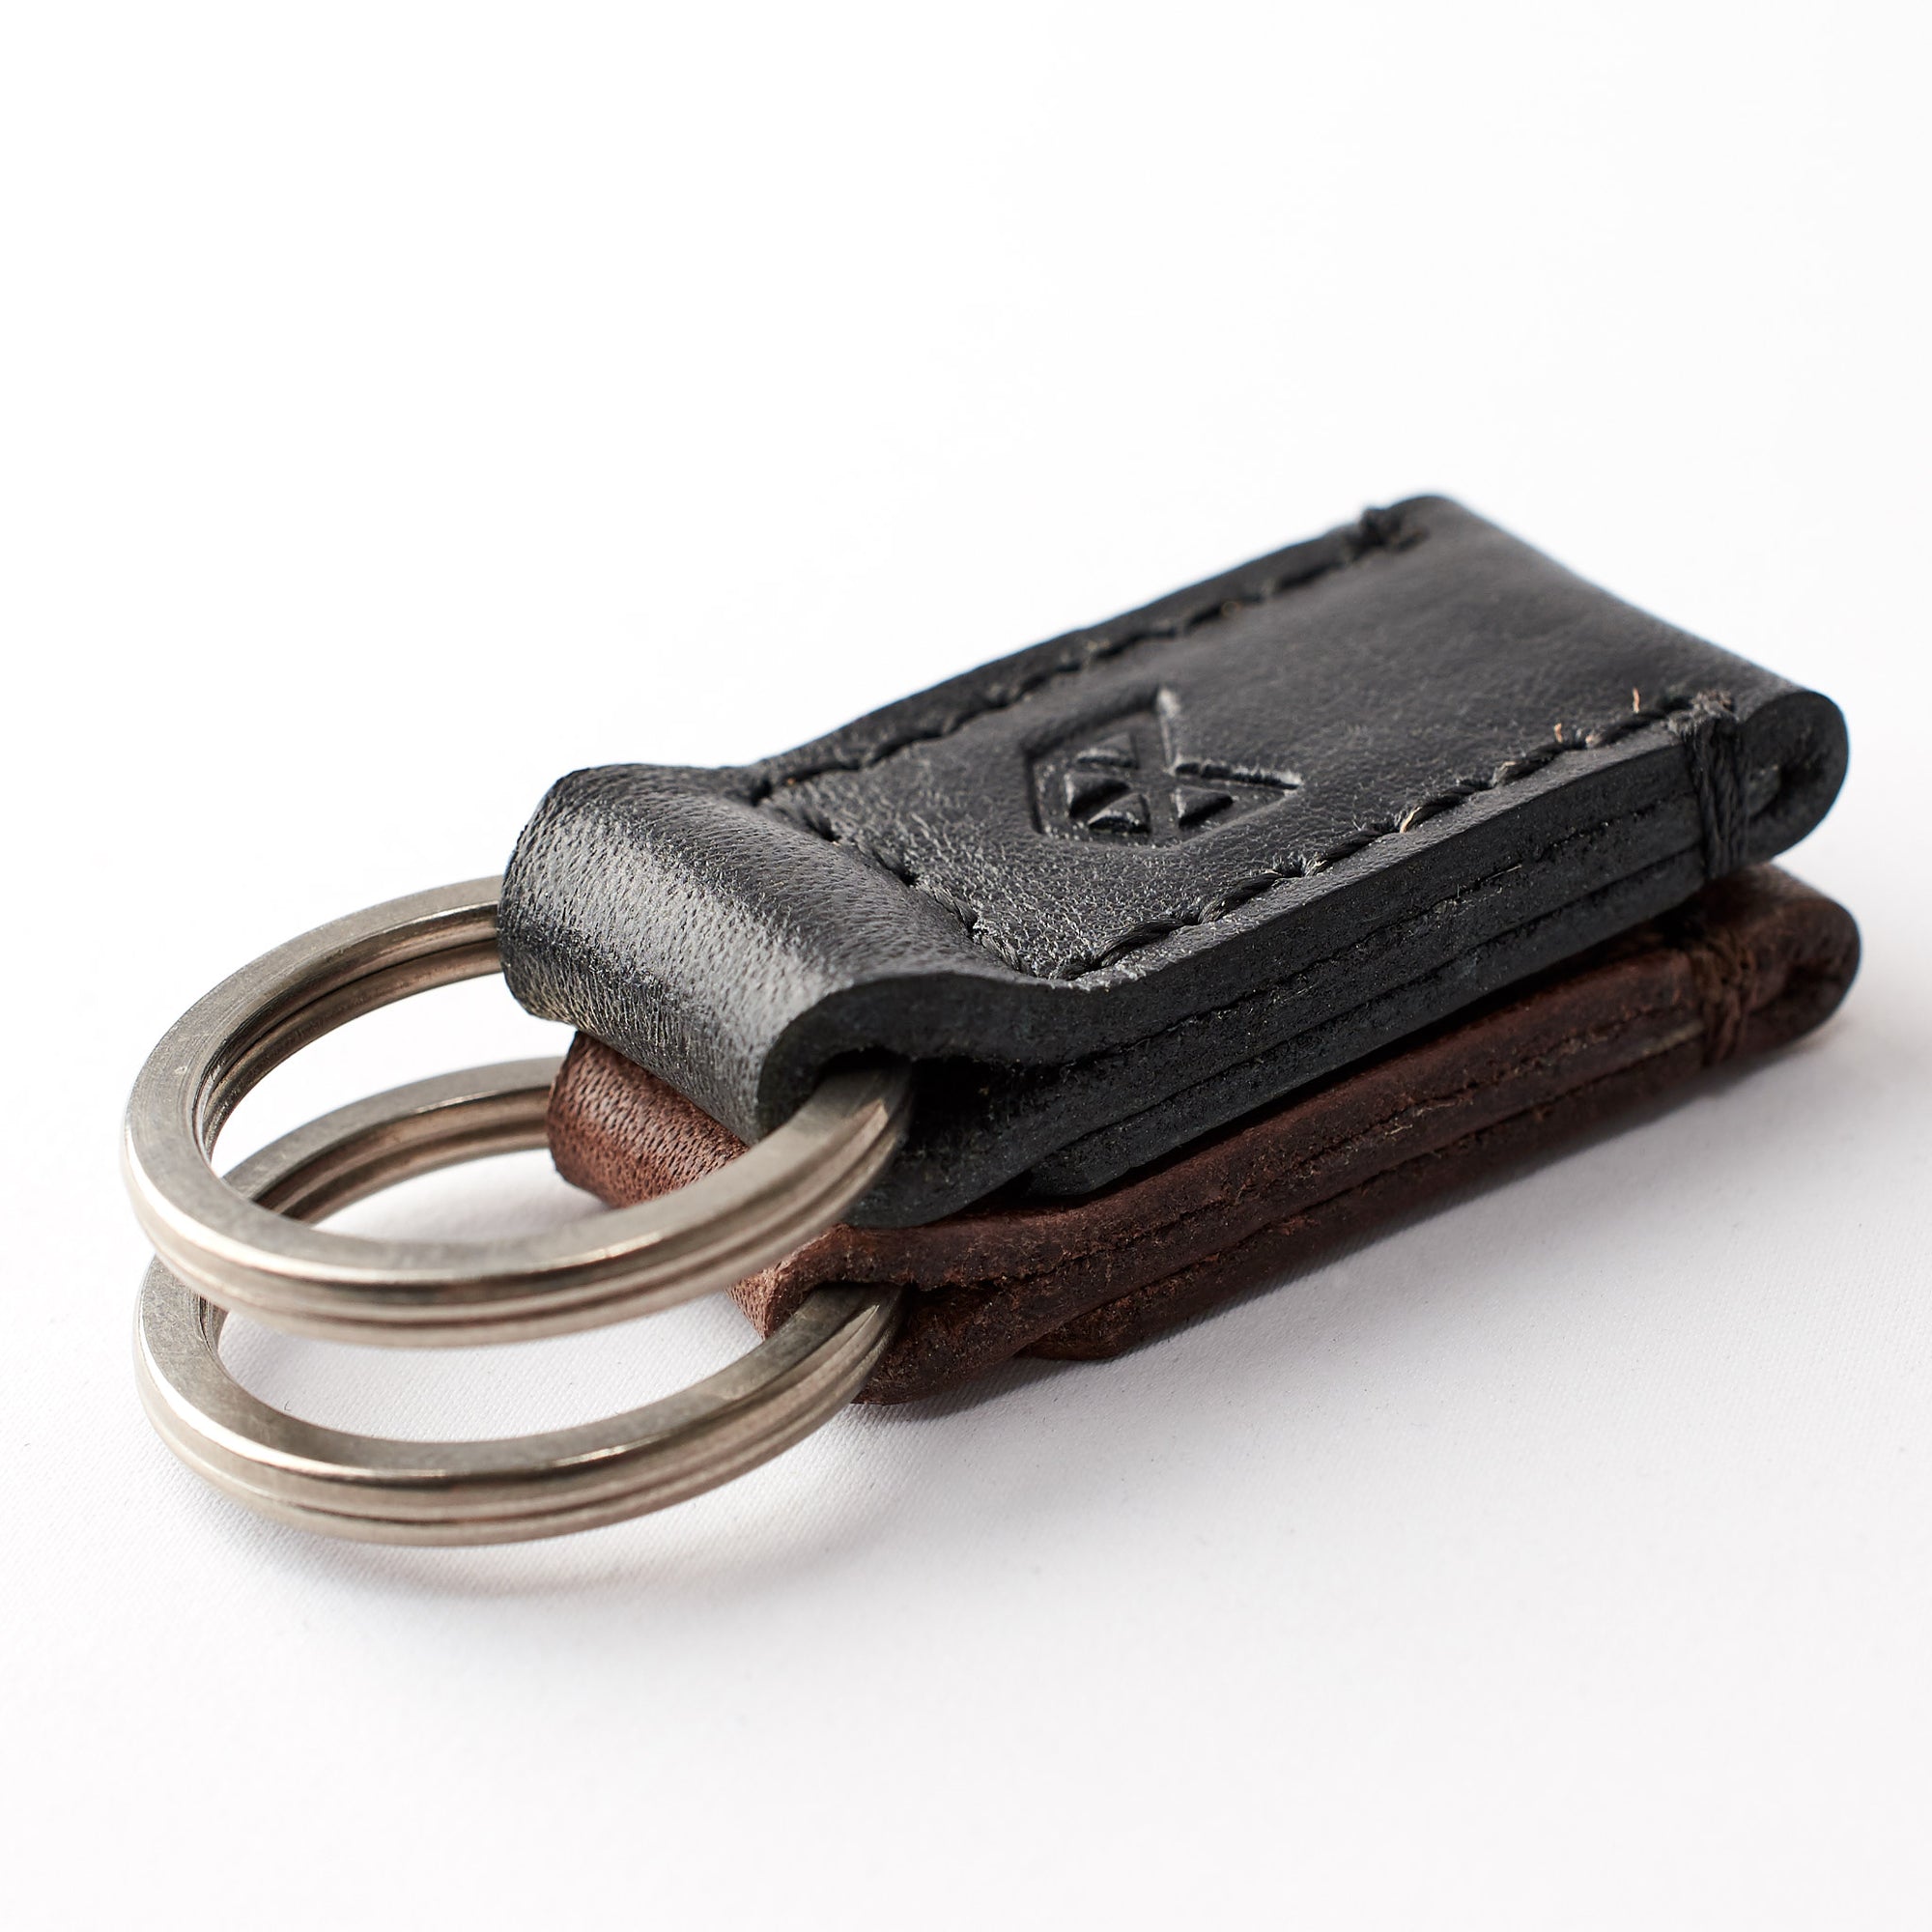 Magnet keychains. Black leather keychain, custom magnetic key fob